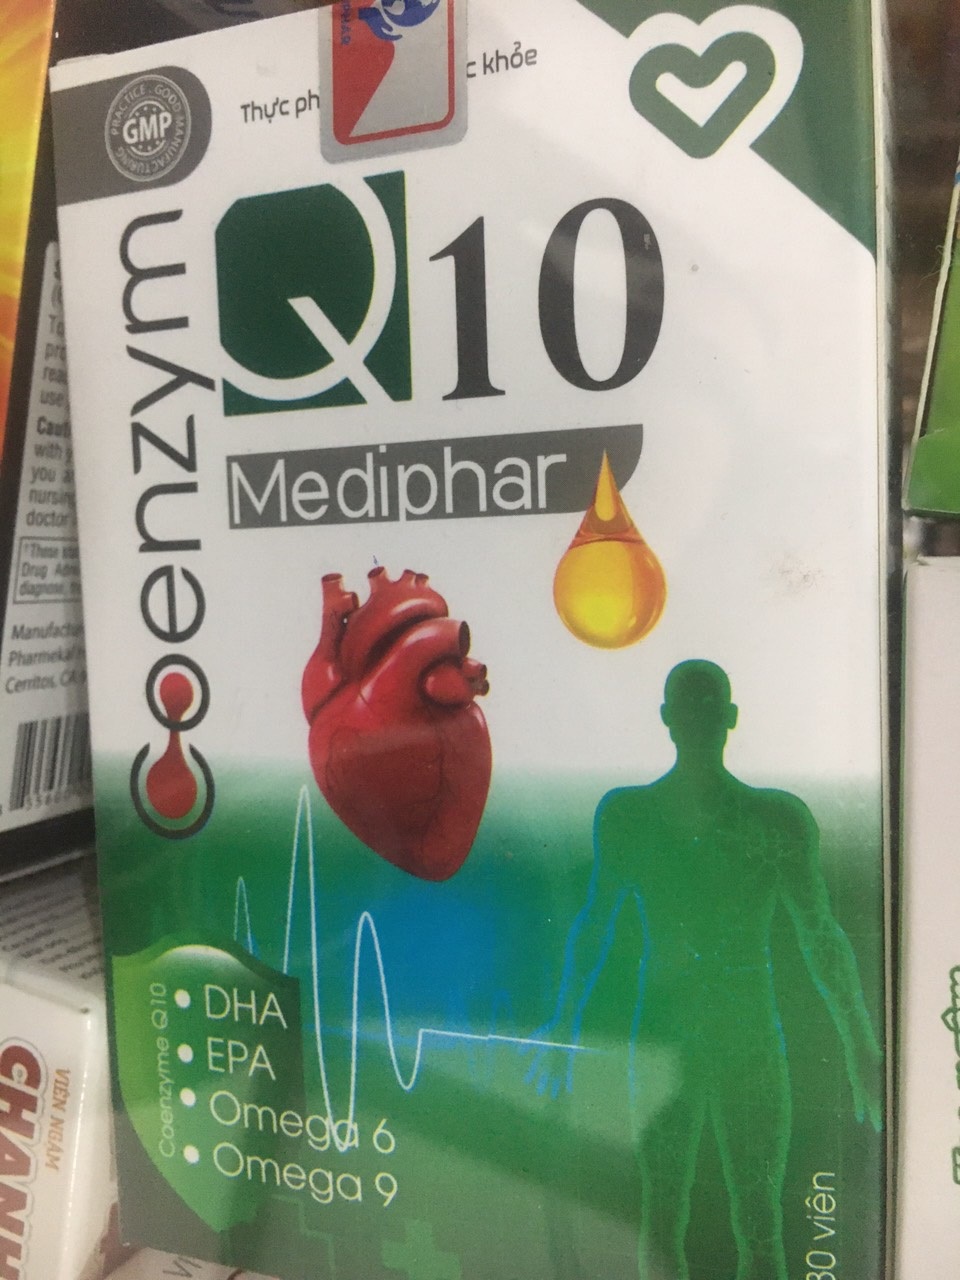 Coenzym Q10 Mediphar